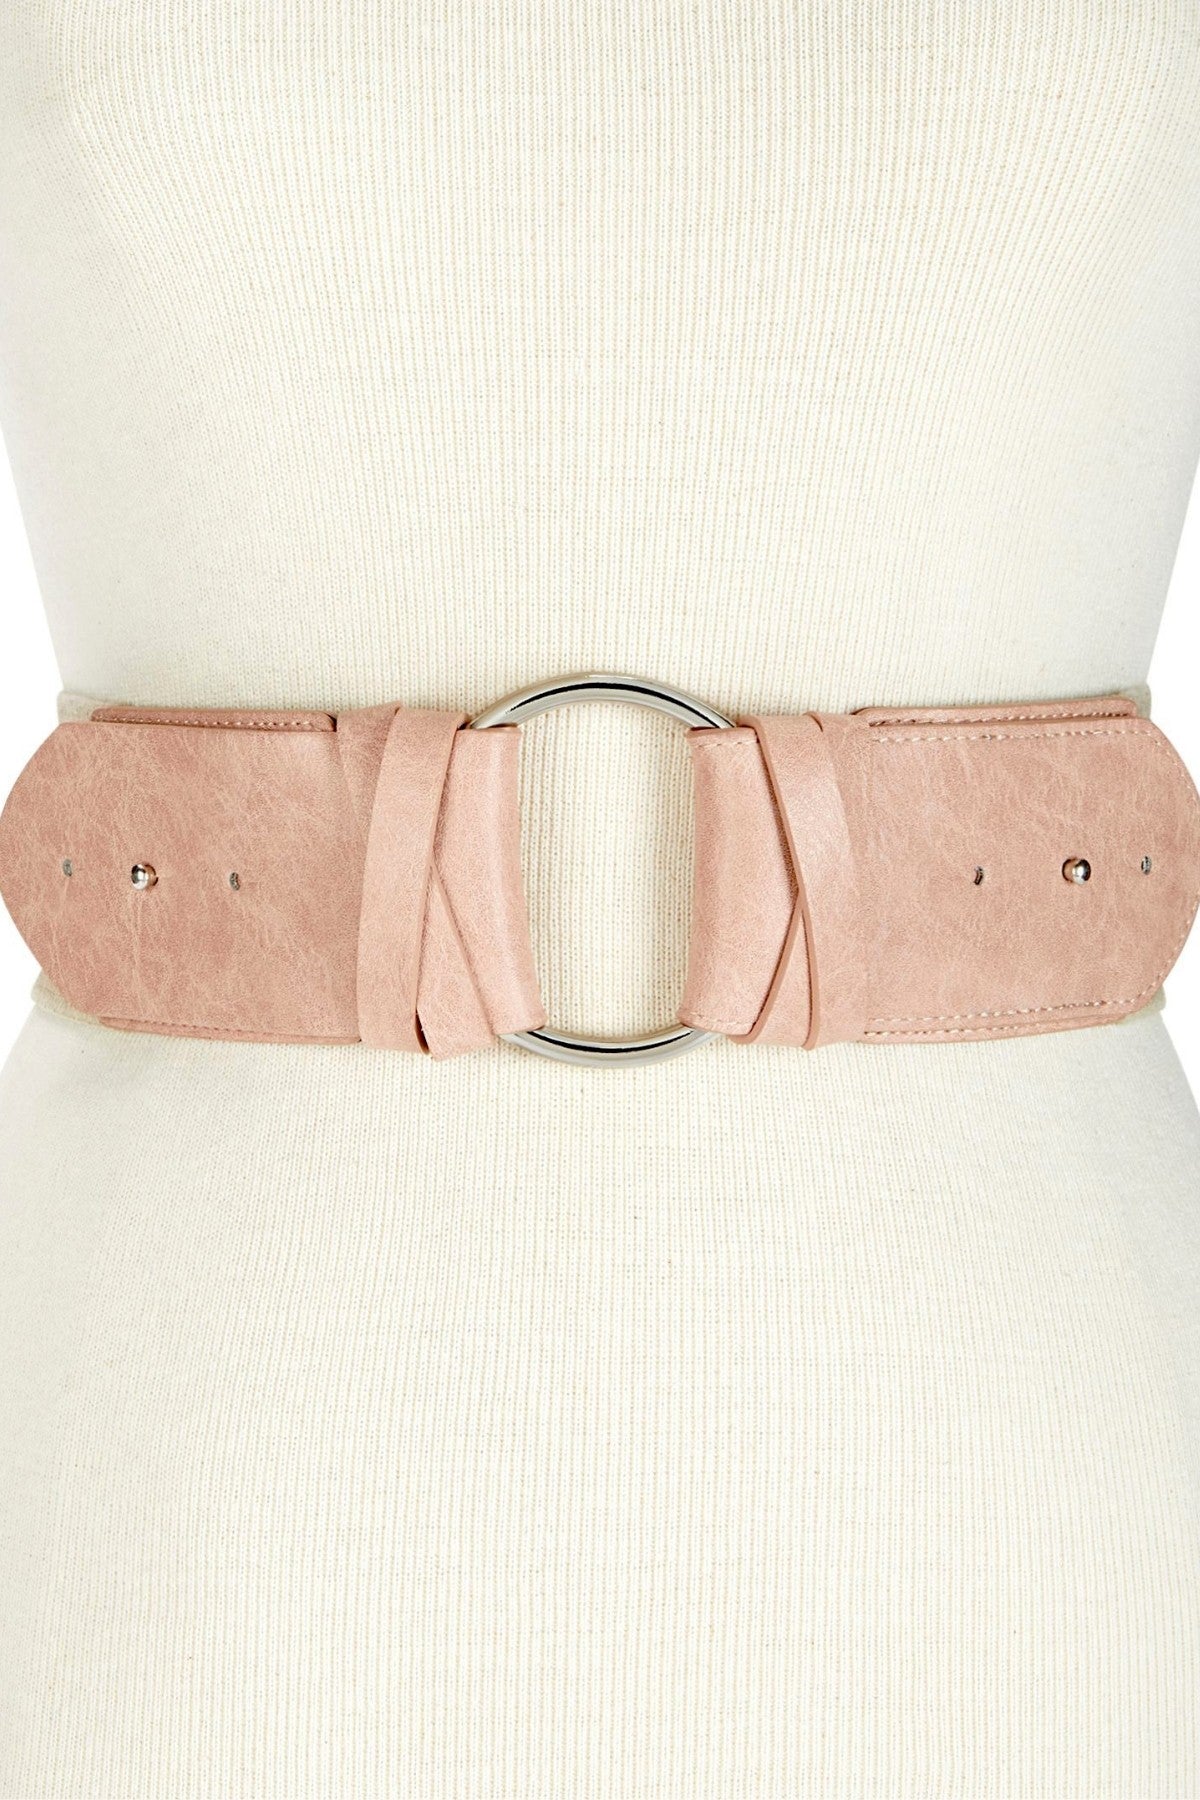 INC International Concepts Blush/Silver-Ring Stretch Belt